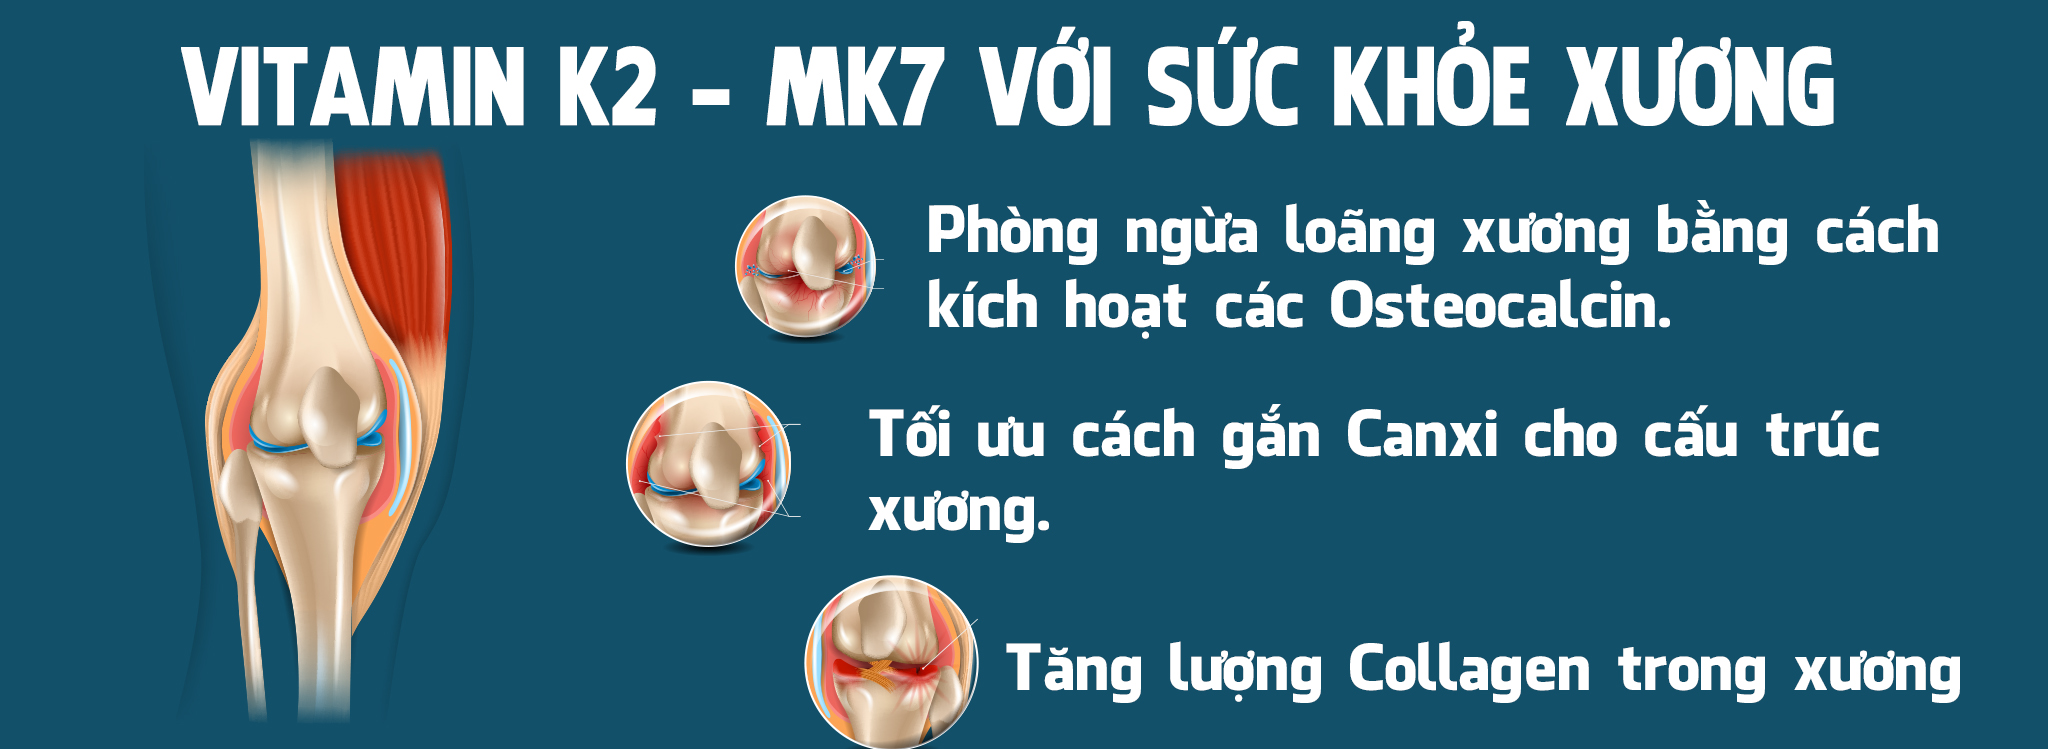 Vitamin K2 - MK 7 la gi - wheyshop